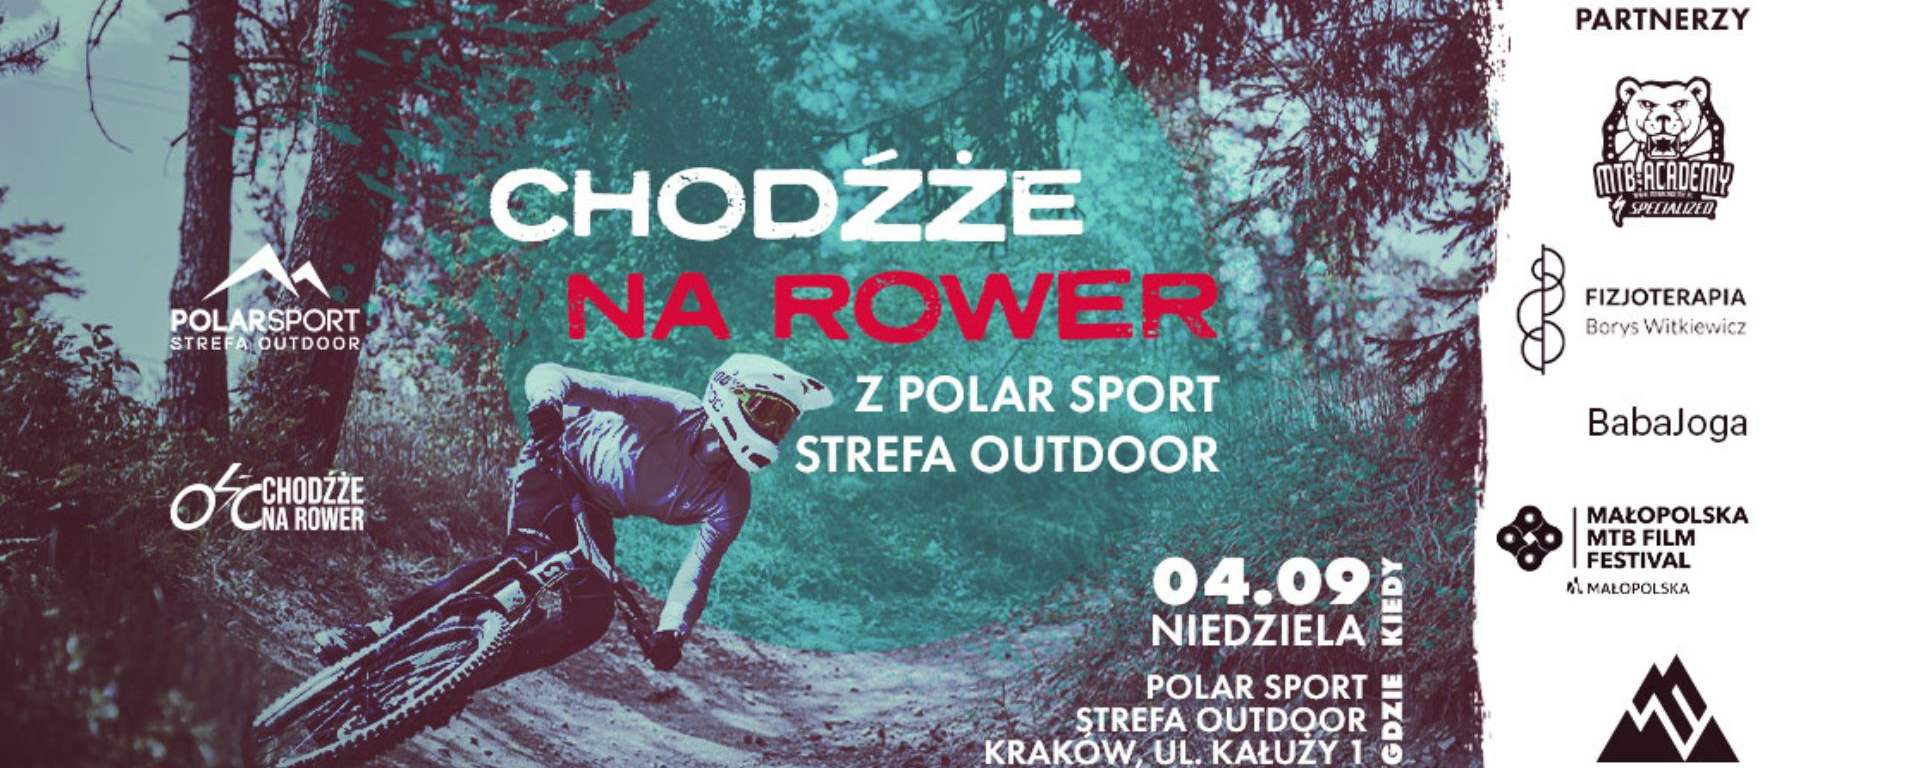 Chodźże na rower z Polar Sport Strefa Outdoor 04.09.2022